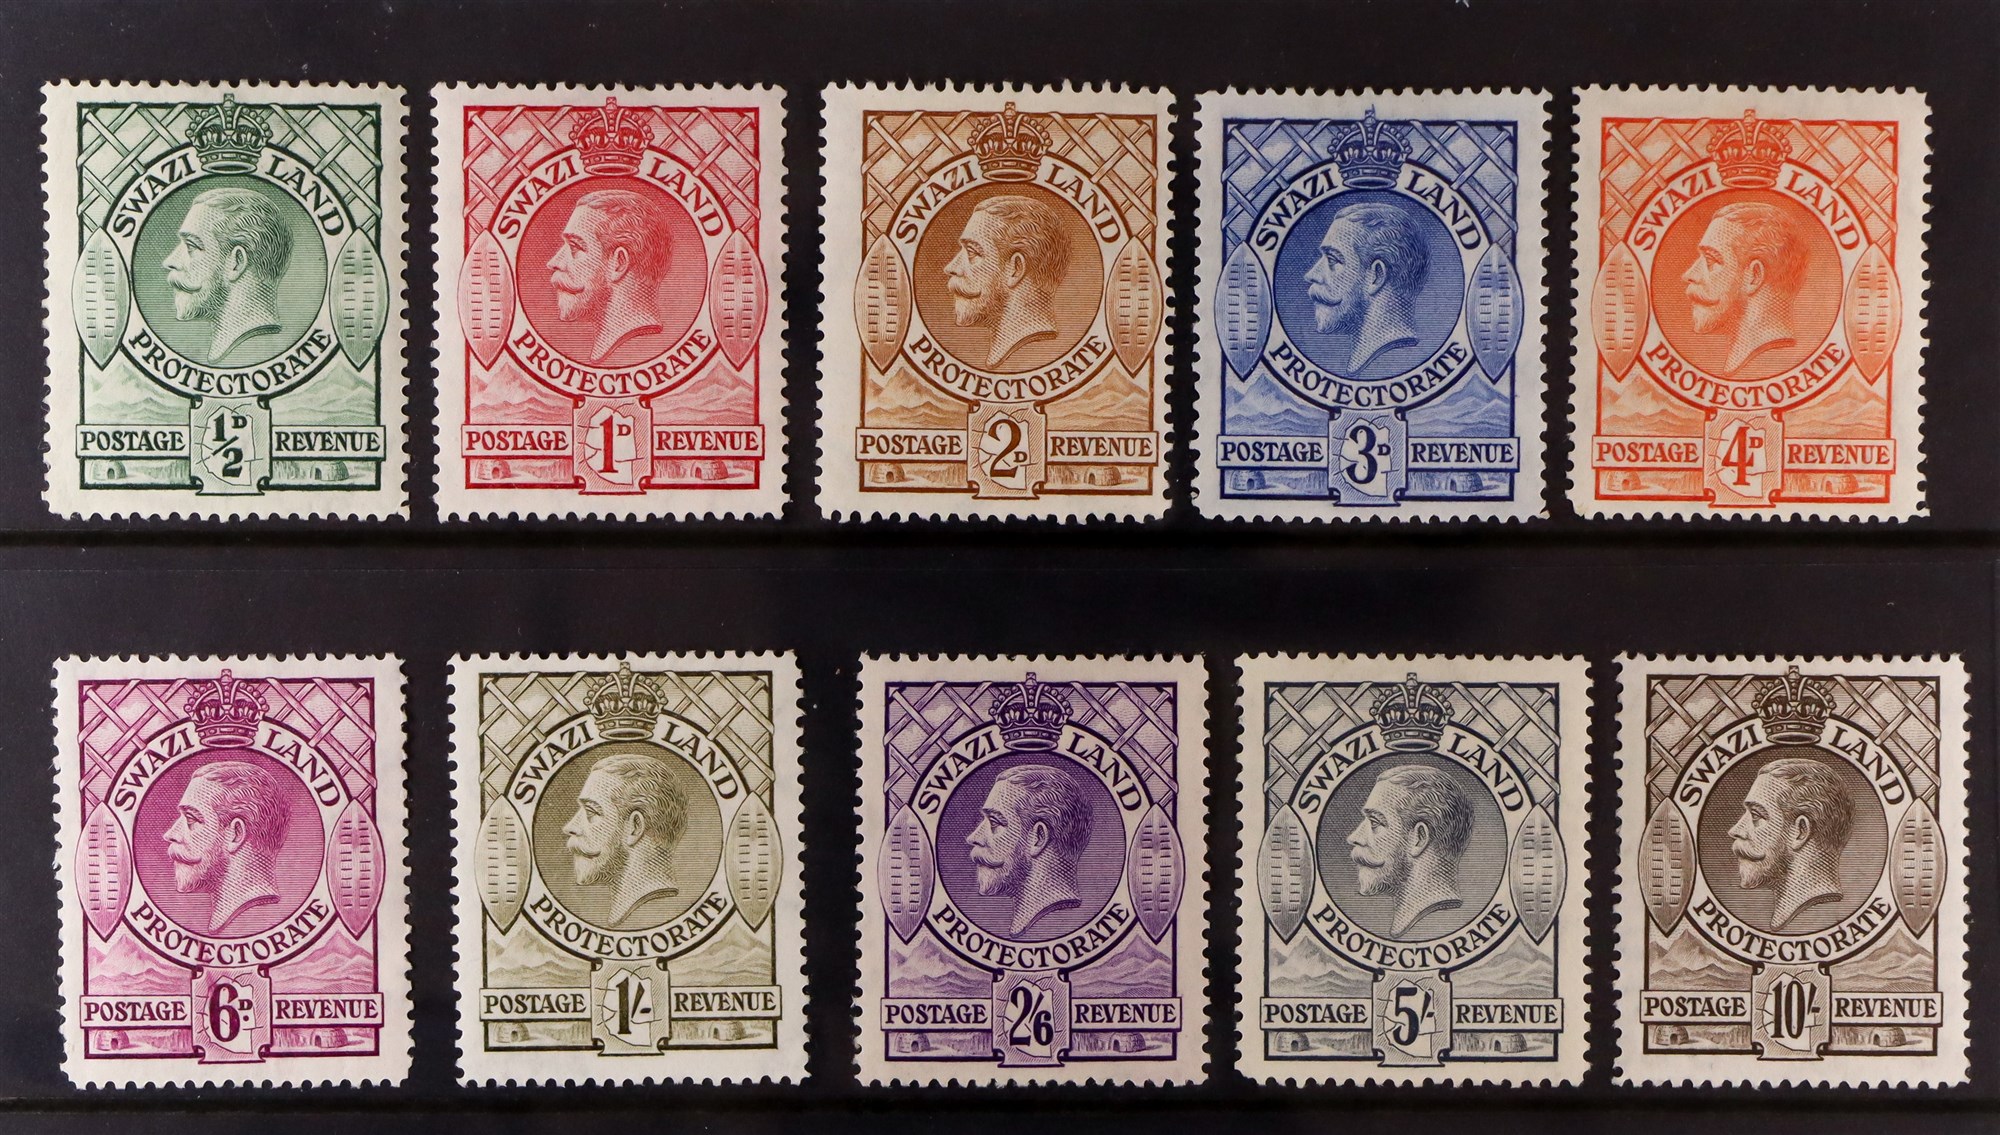 SWAZILAND 1933 Shields set, SG 11/20, fine mint. Cat. £180 (10 stamps)